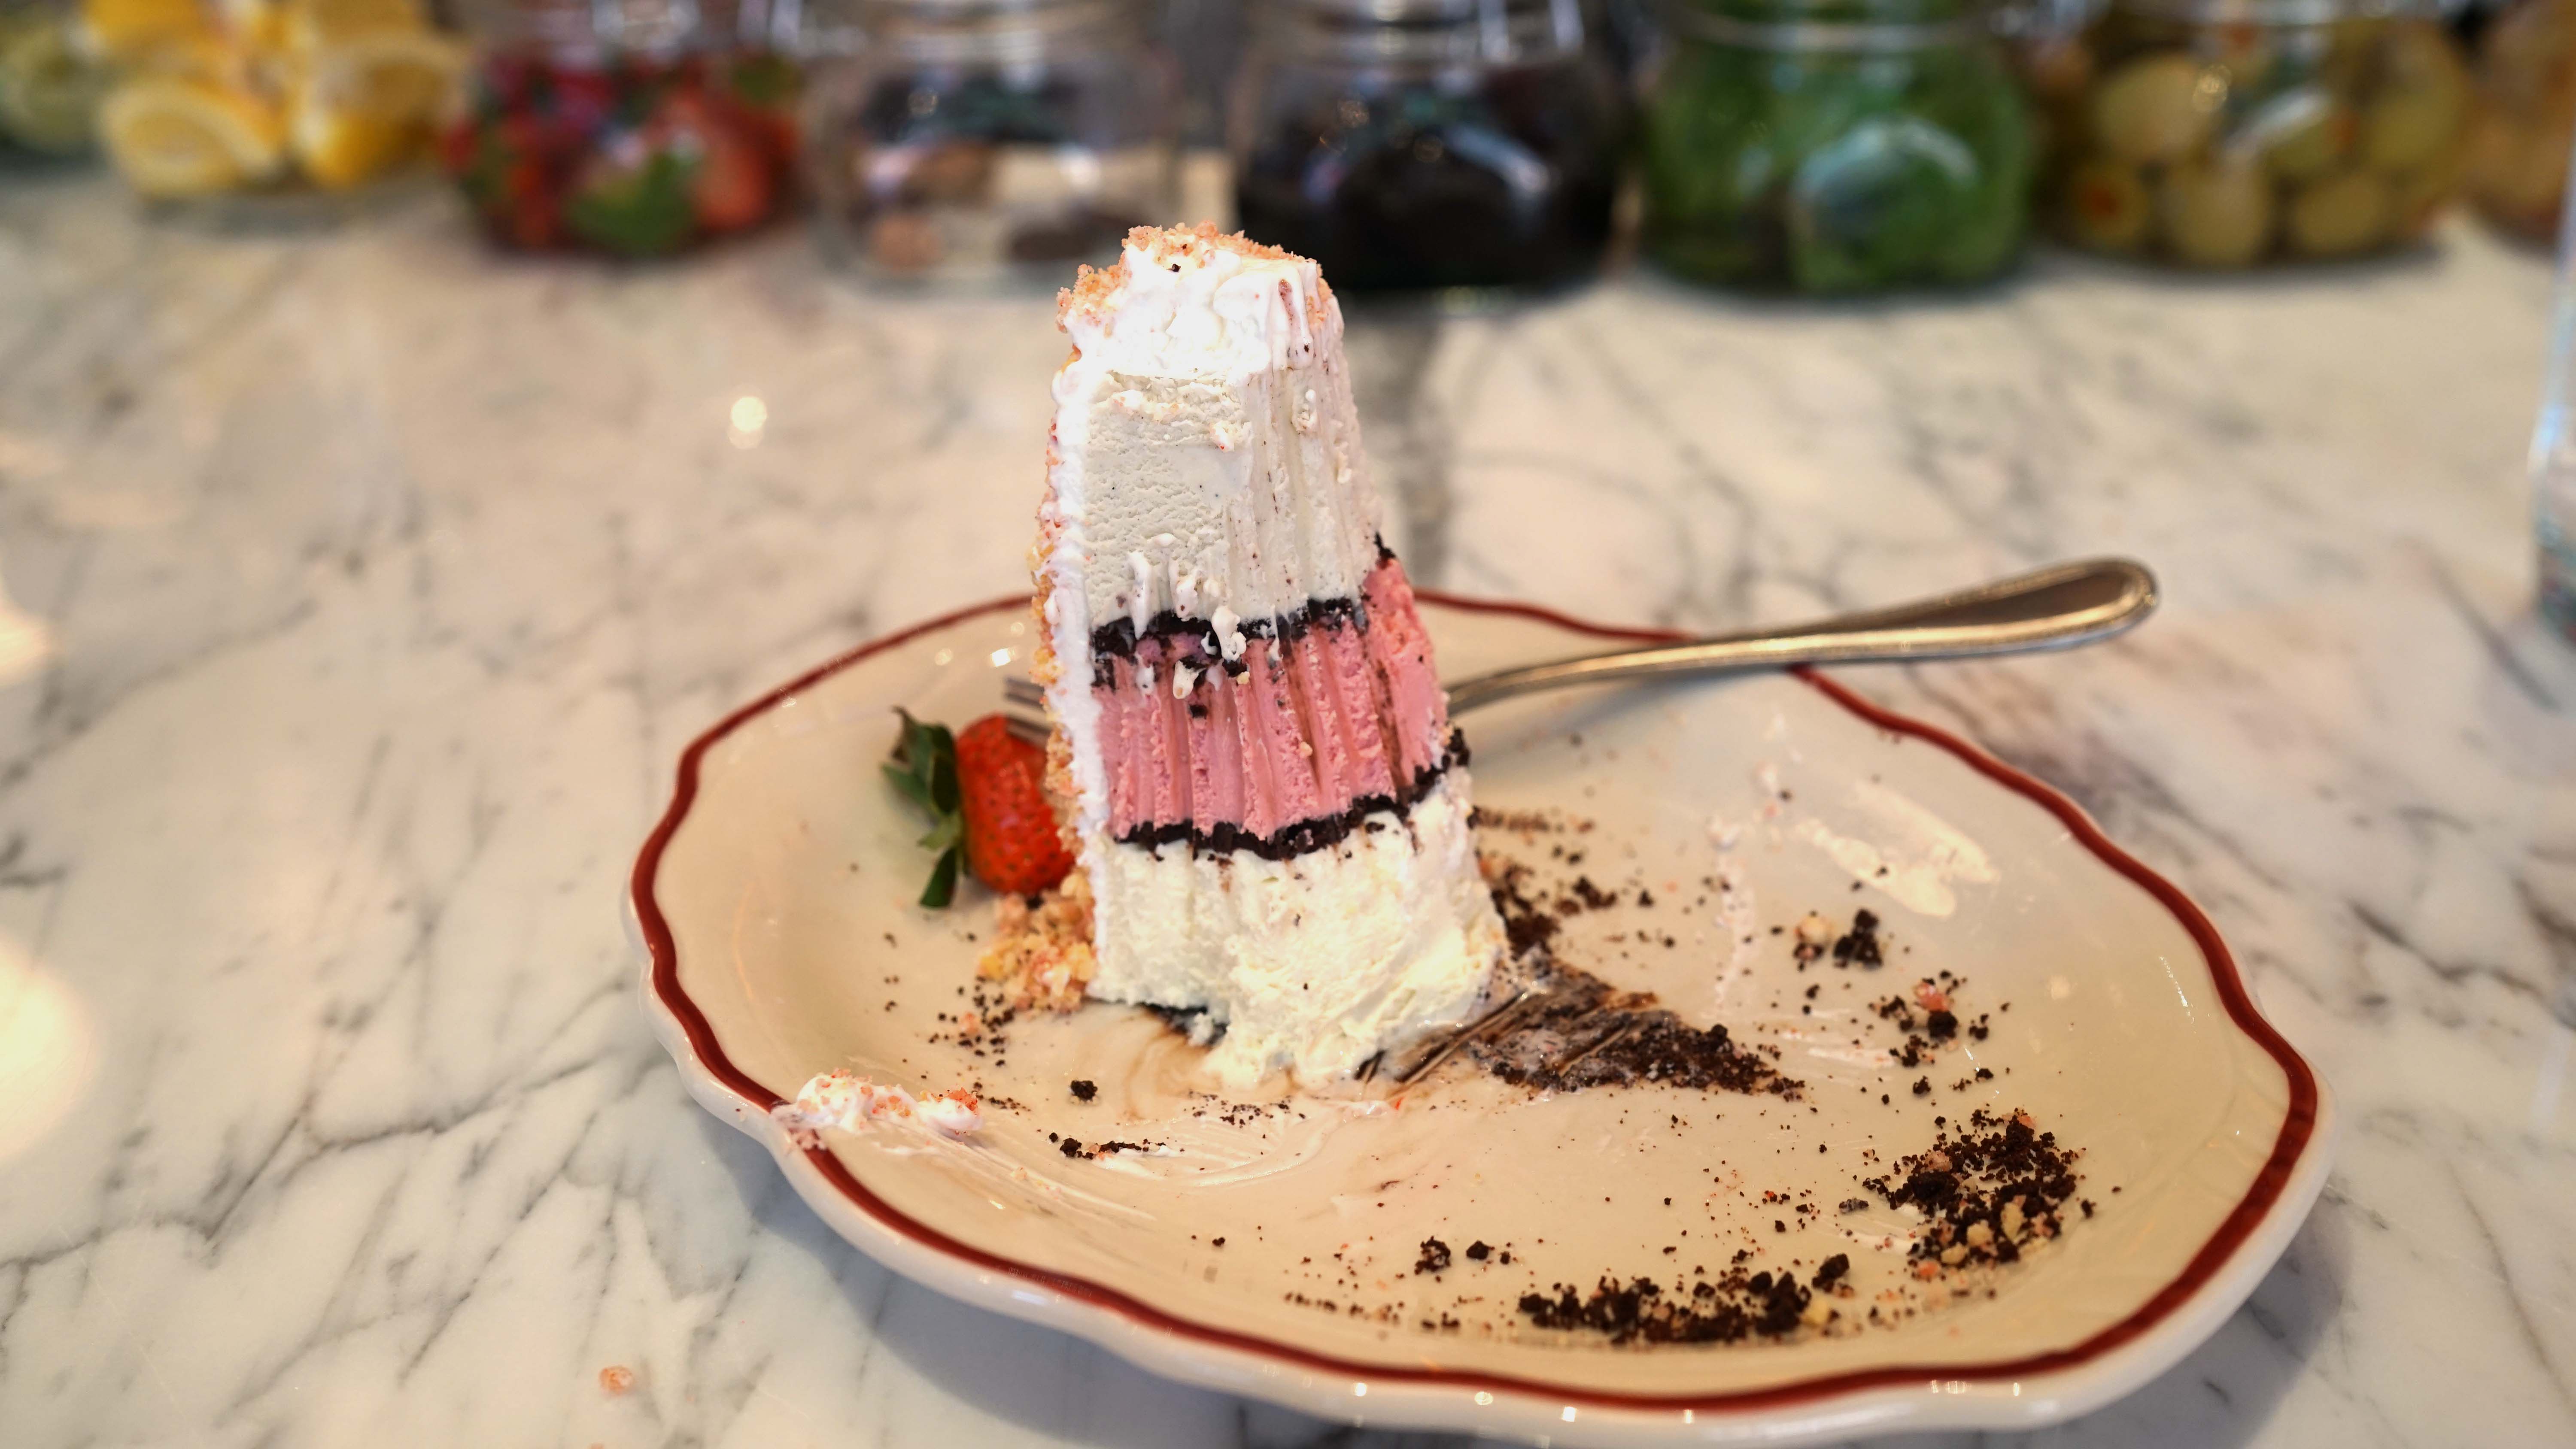 Parm strawberry shortcake ice cream cake eaten